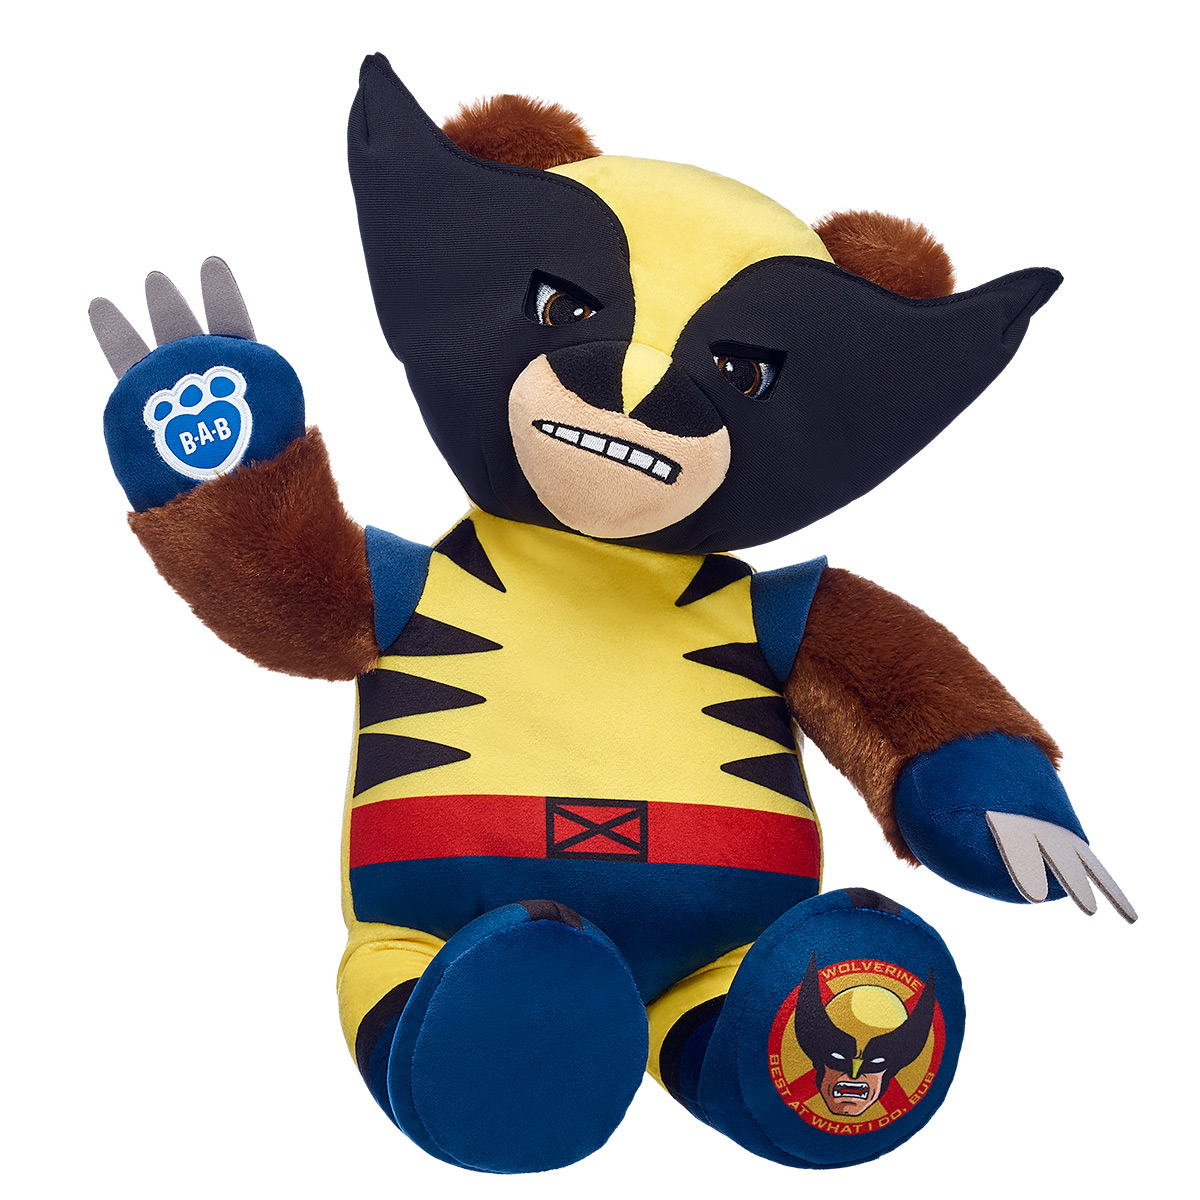 Wolverine.jpg